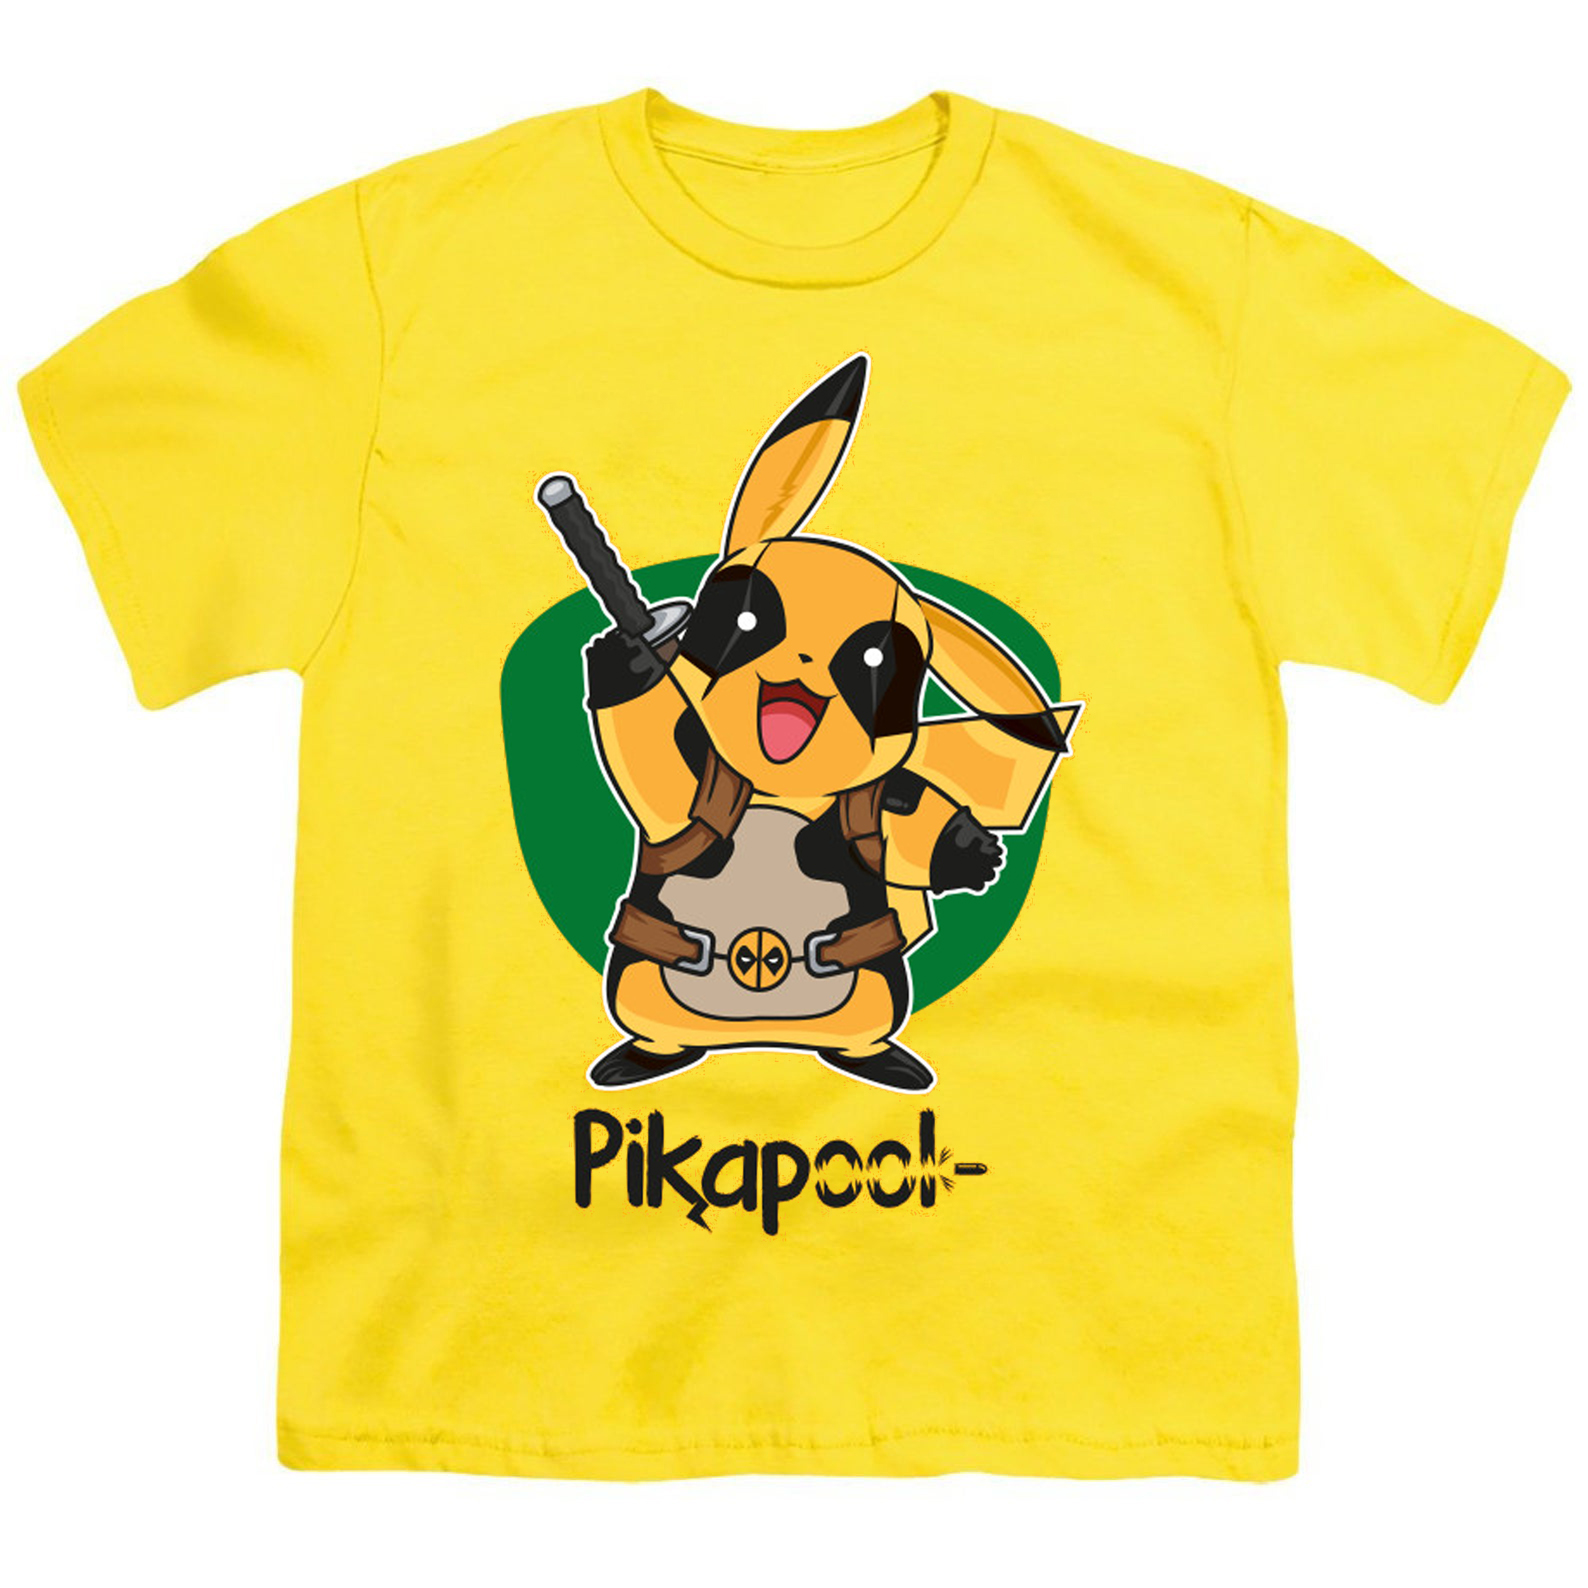 Pikachu Deadpool shirt, Pikapool Shirt